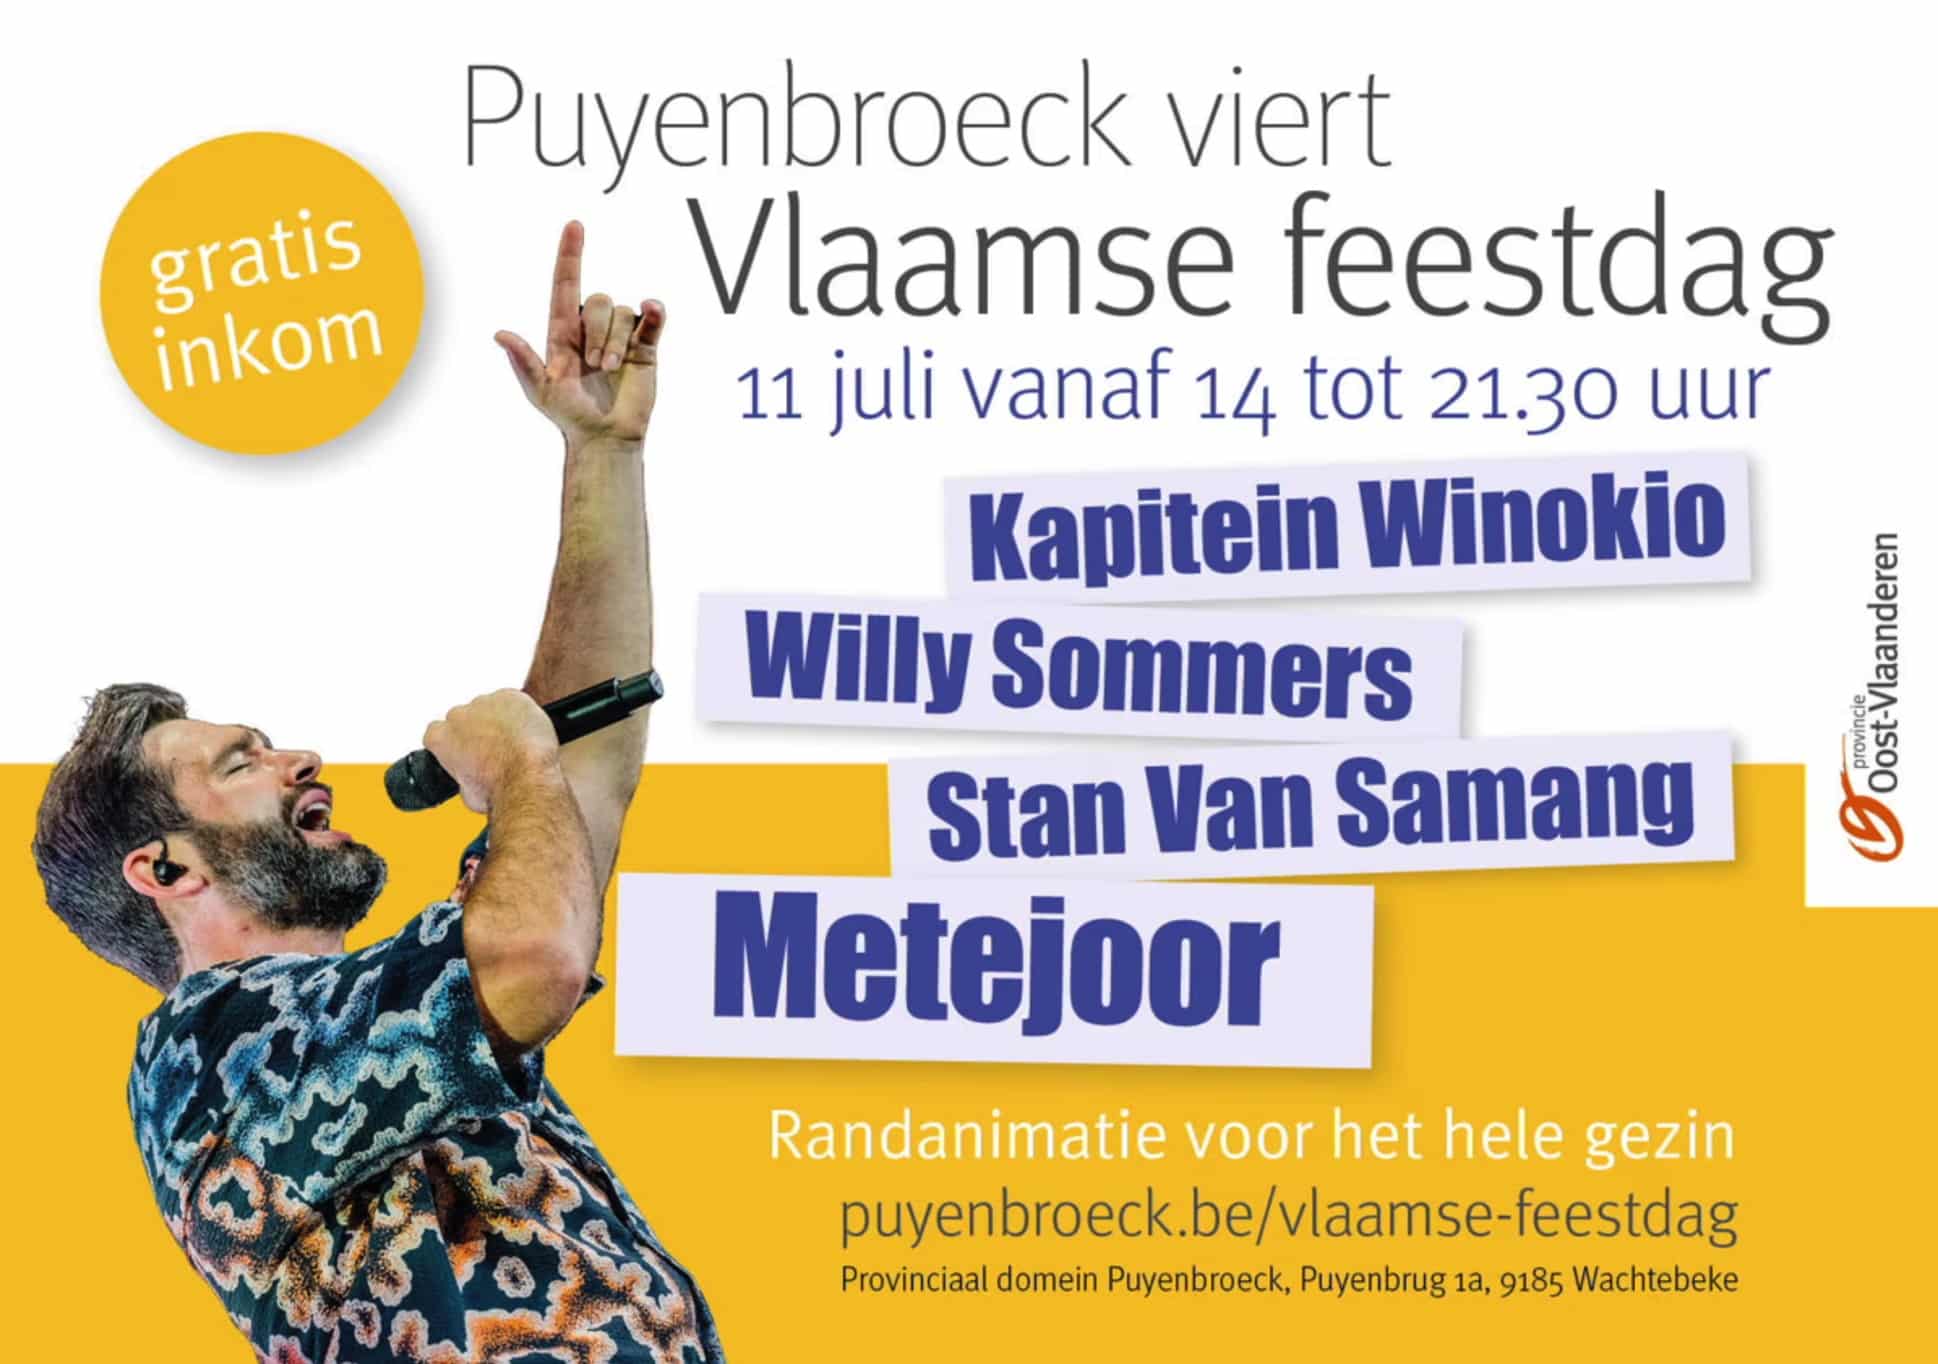 Vier de Vlaamse Feestdag in domein Puyenbroeck